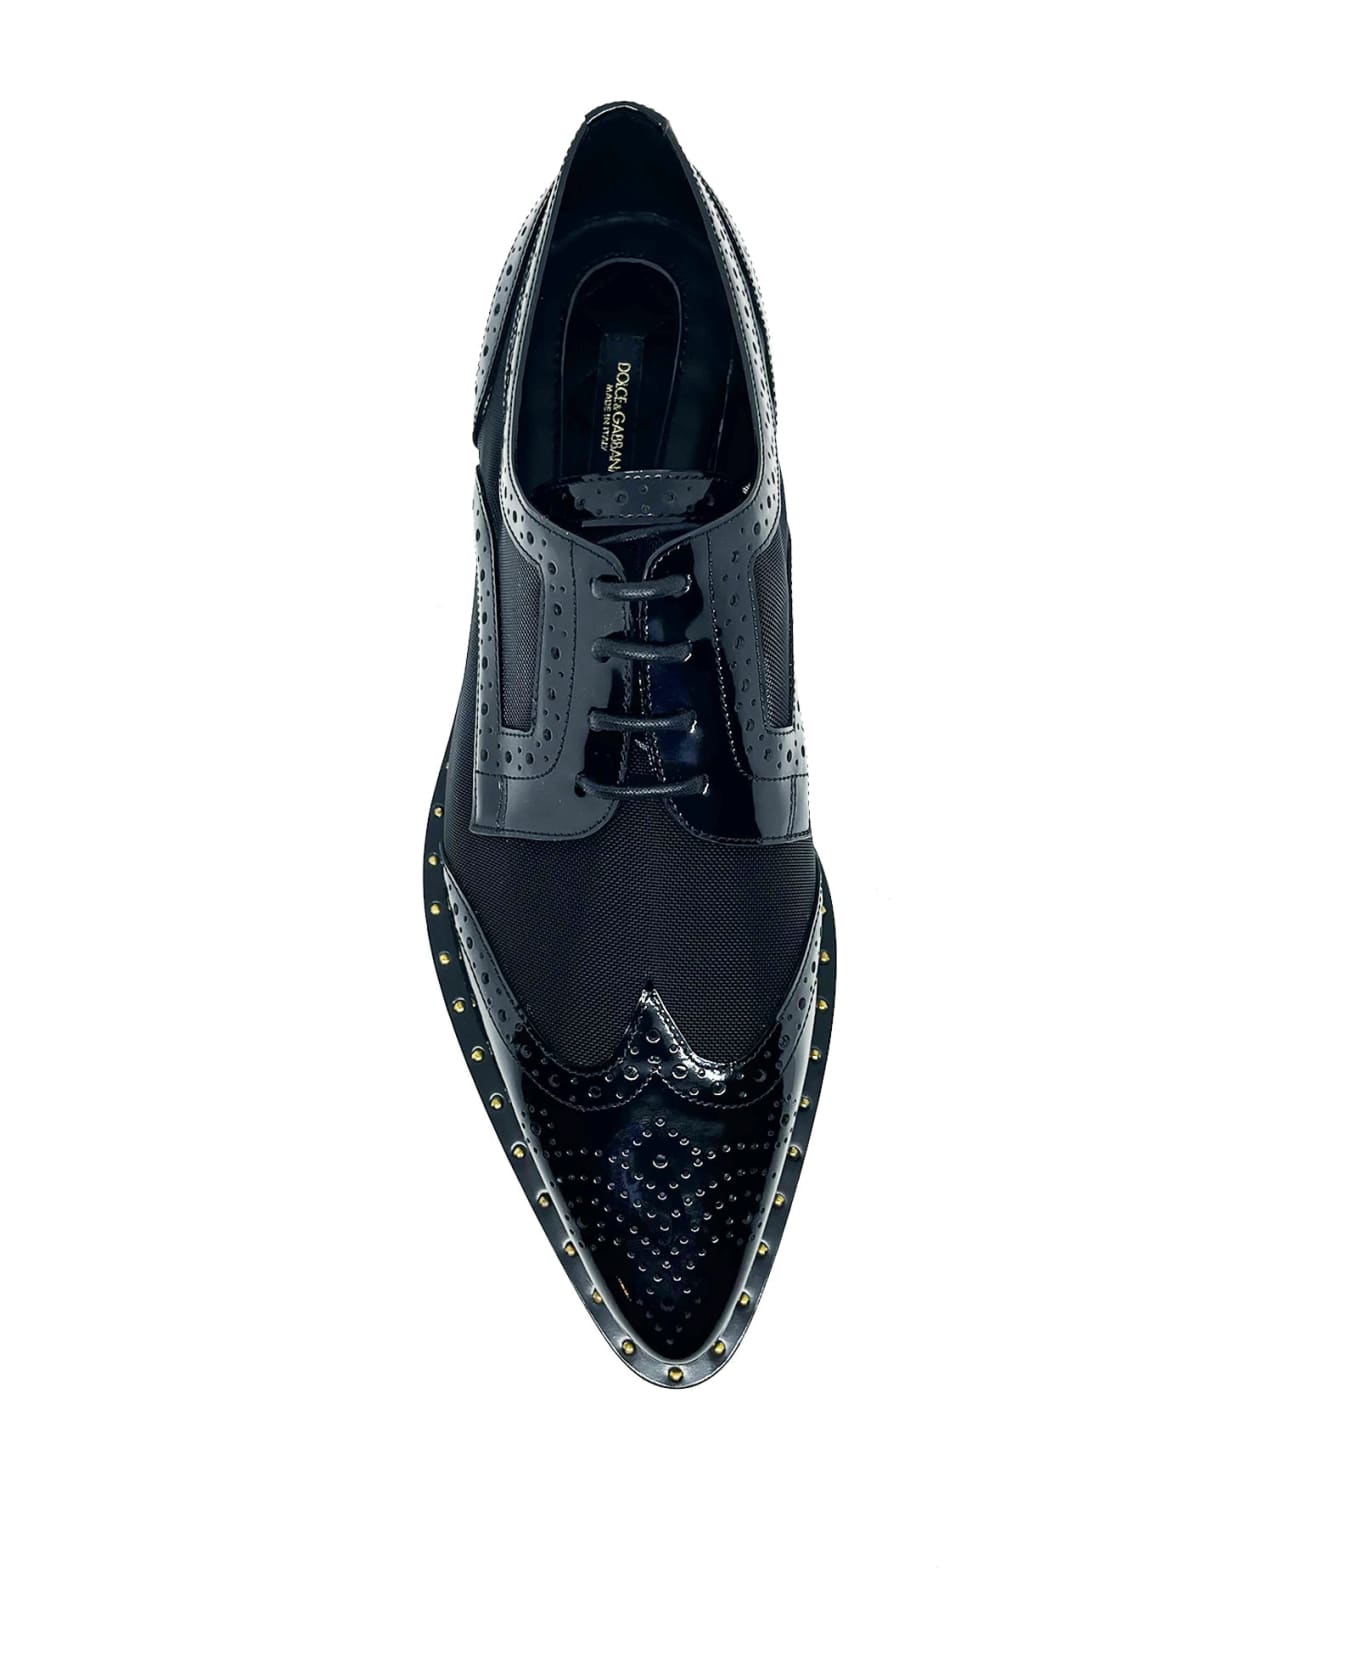 Dolce & Gabbana Millenials Leather Flats - Black